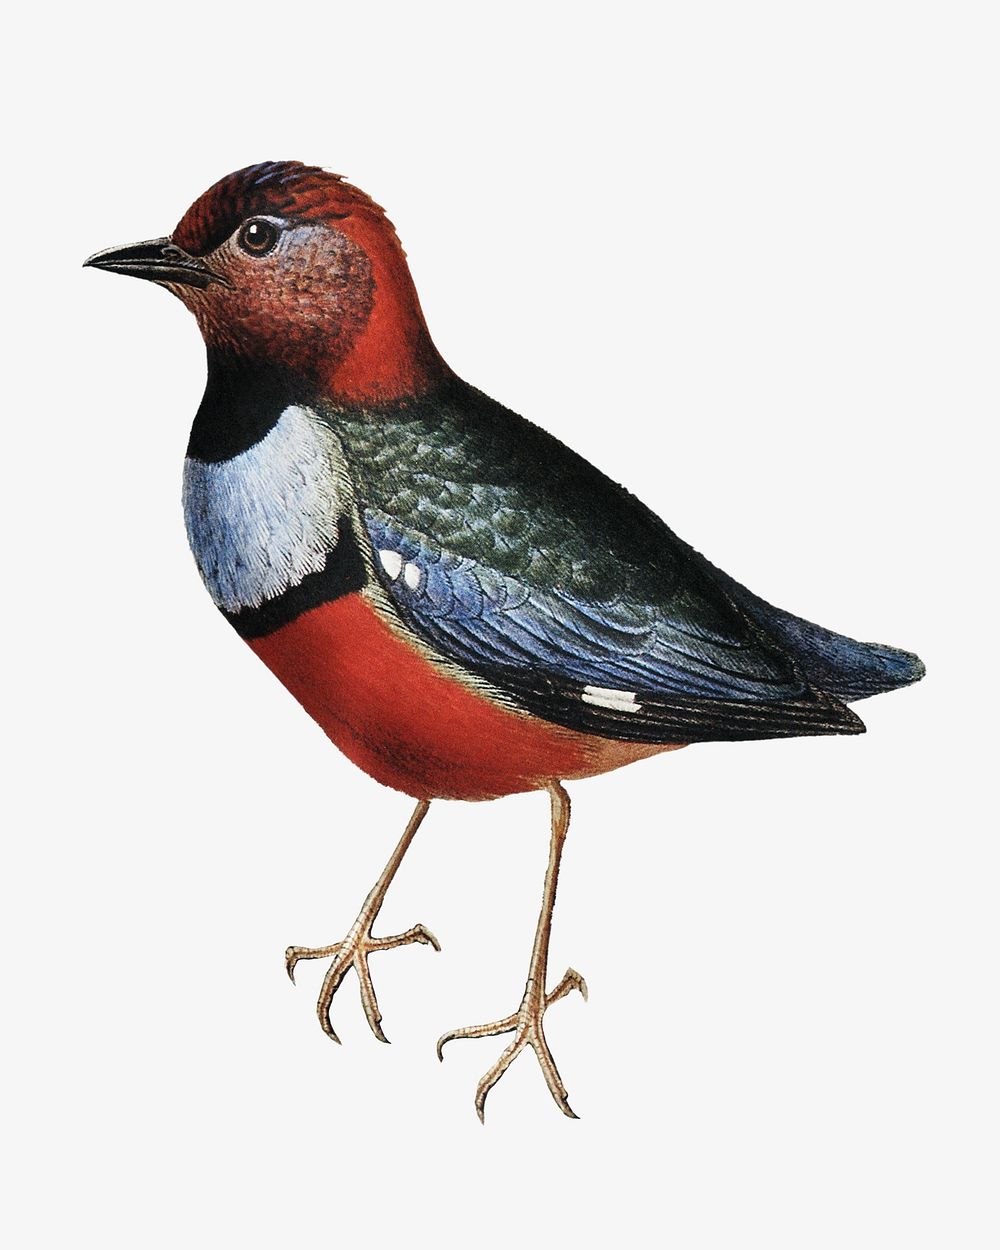 Macklot's pitta bird, vintage animal illustration